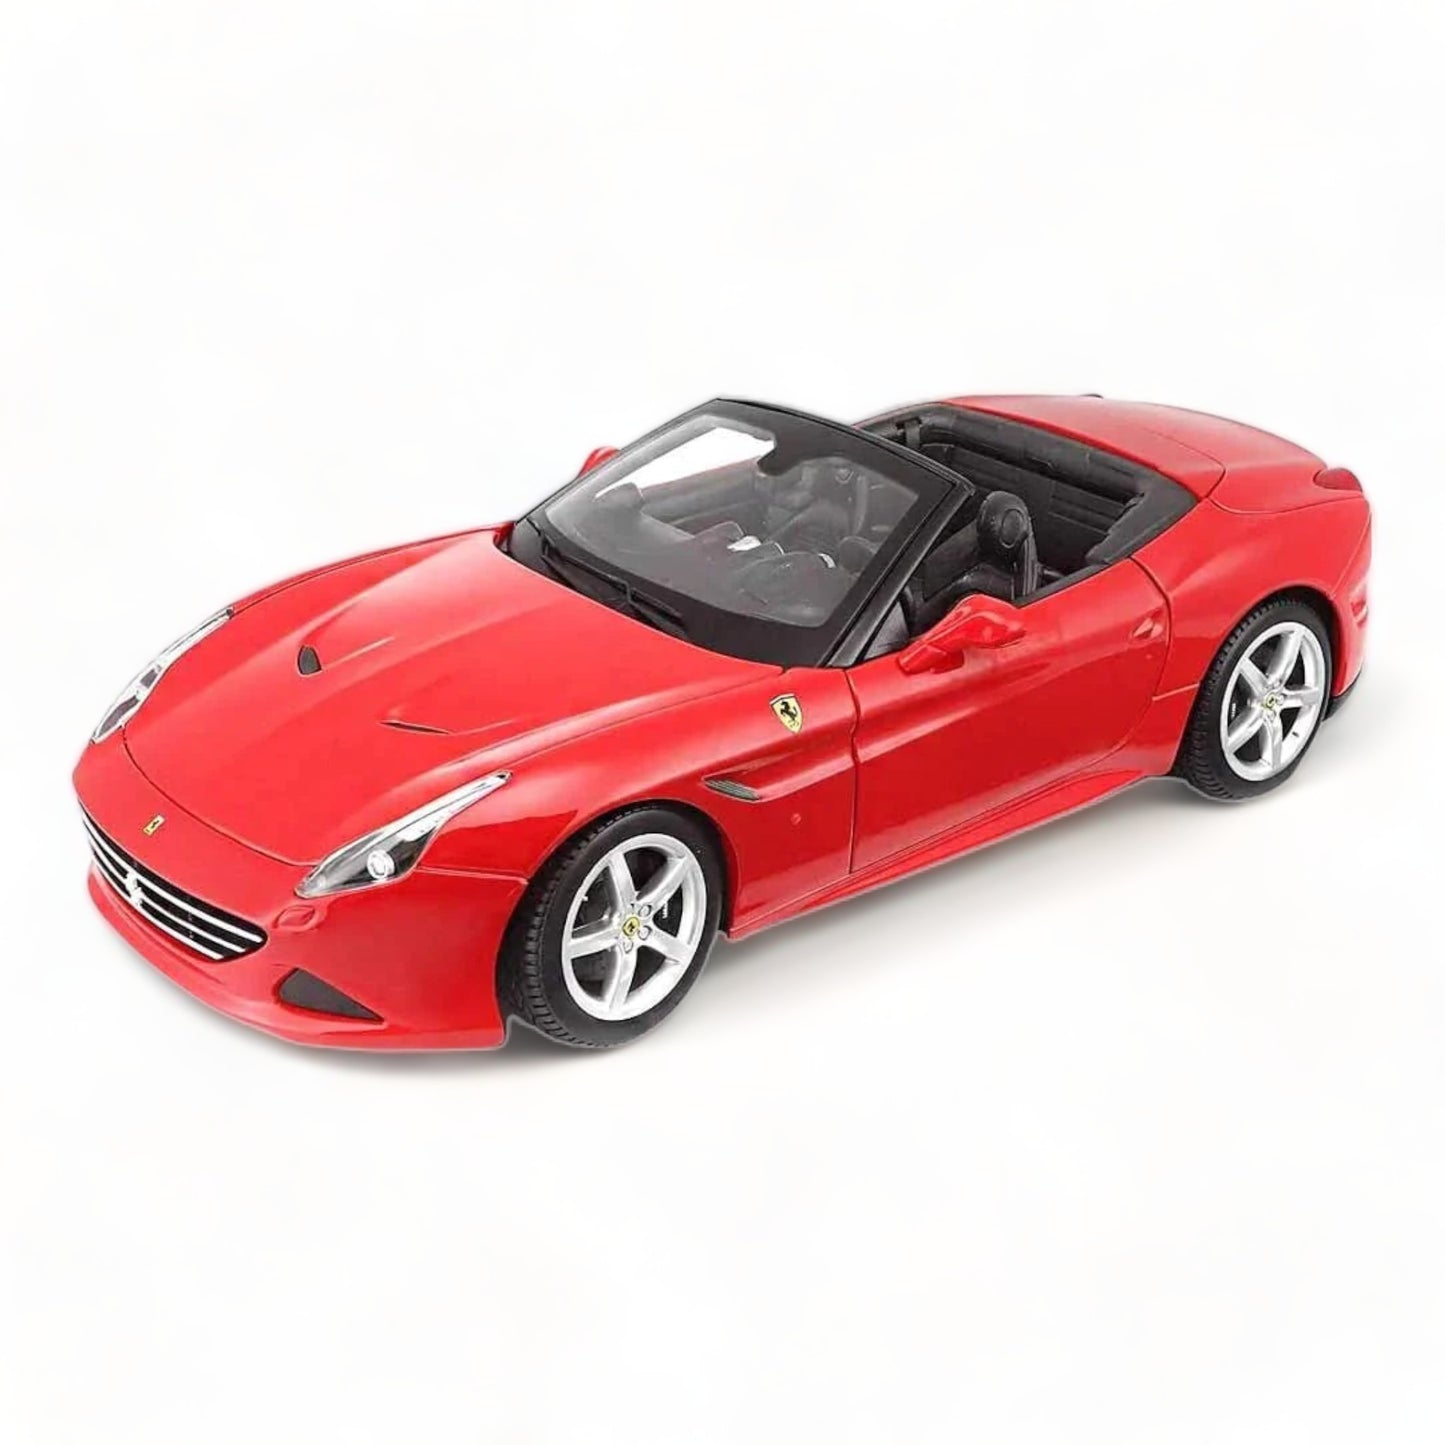 1/18 Diecast Ferrari California T Open Top Red Bburago Scale Model Car